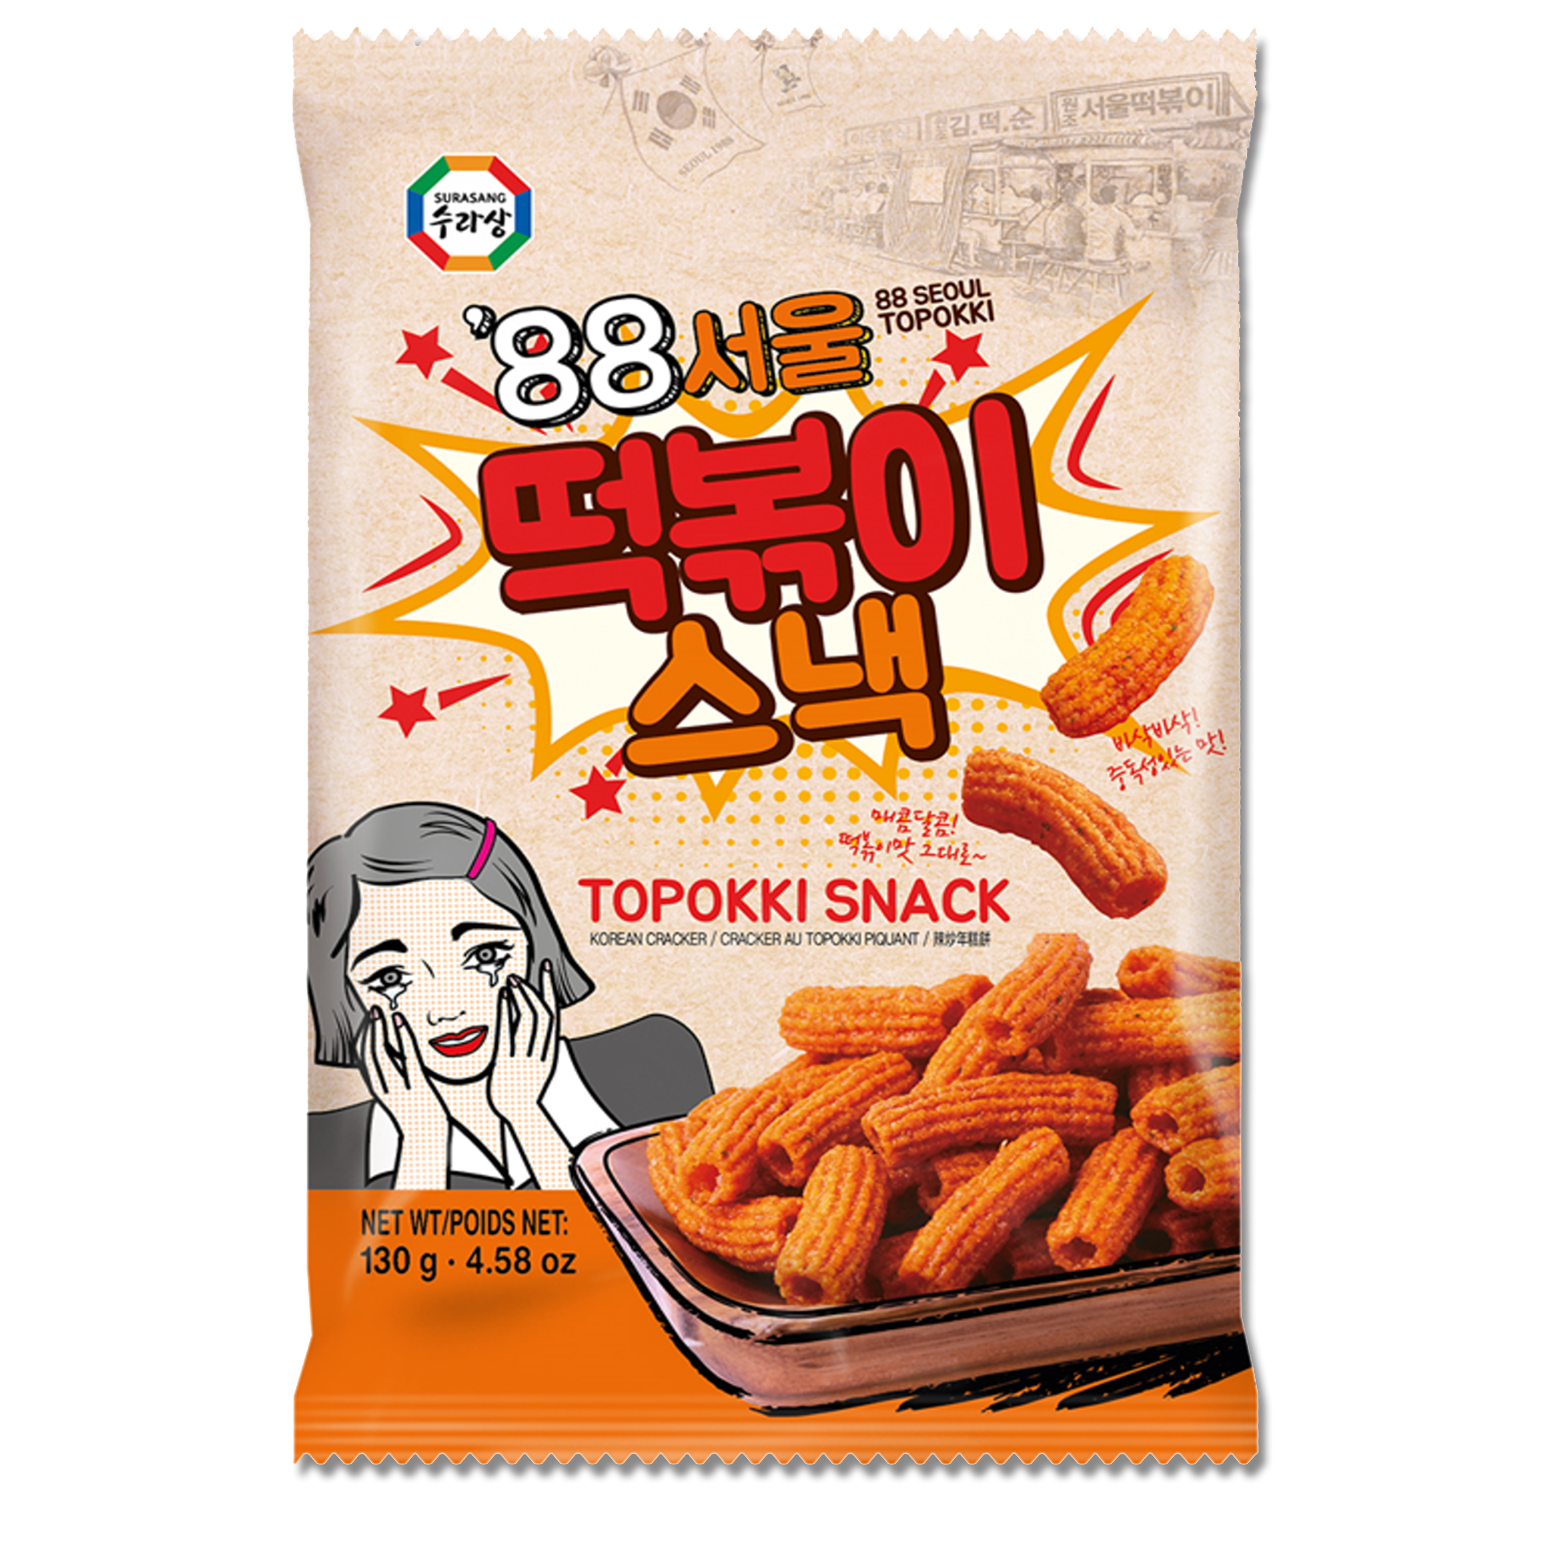 Tteobokki Chips: The popular Korean dish as a snack